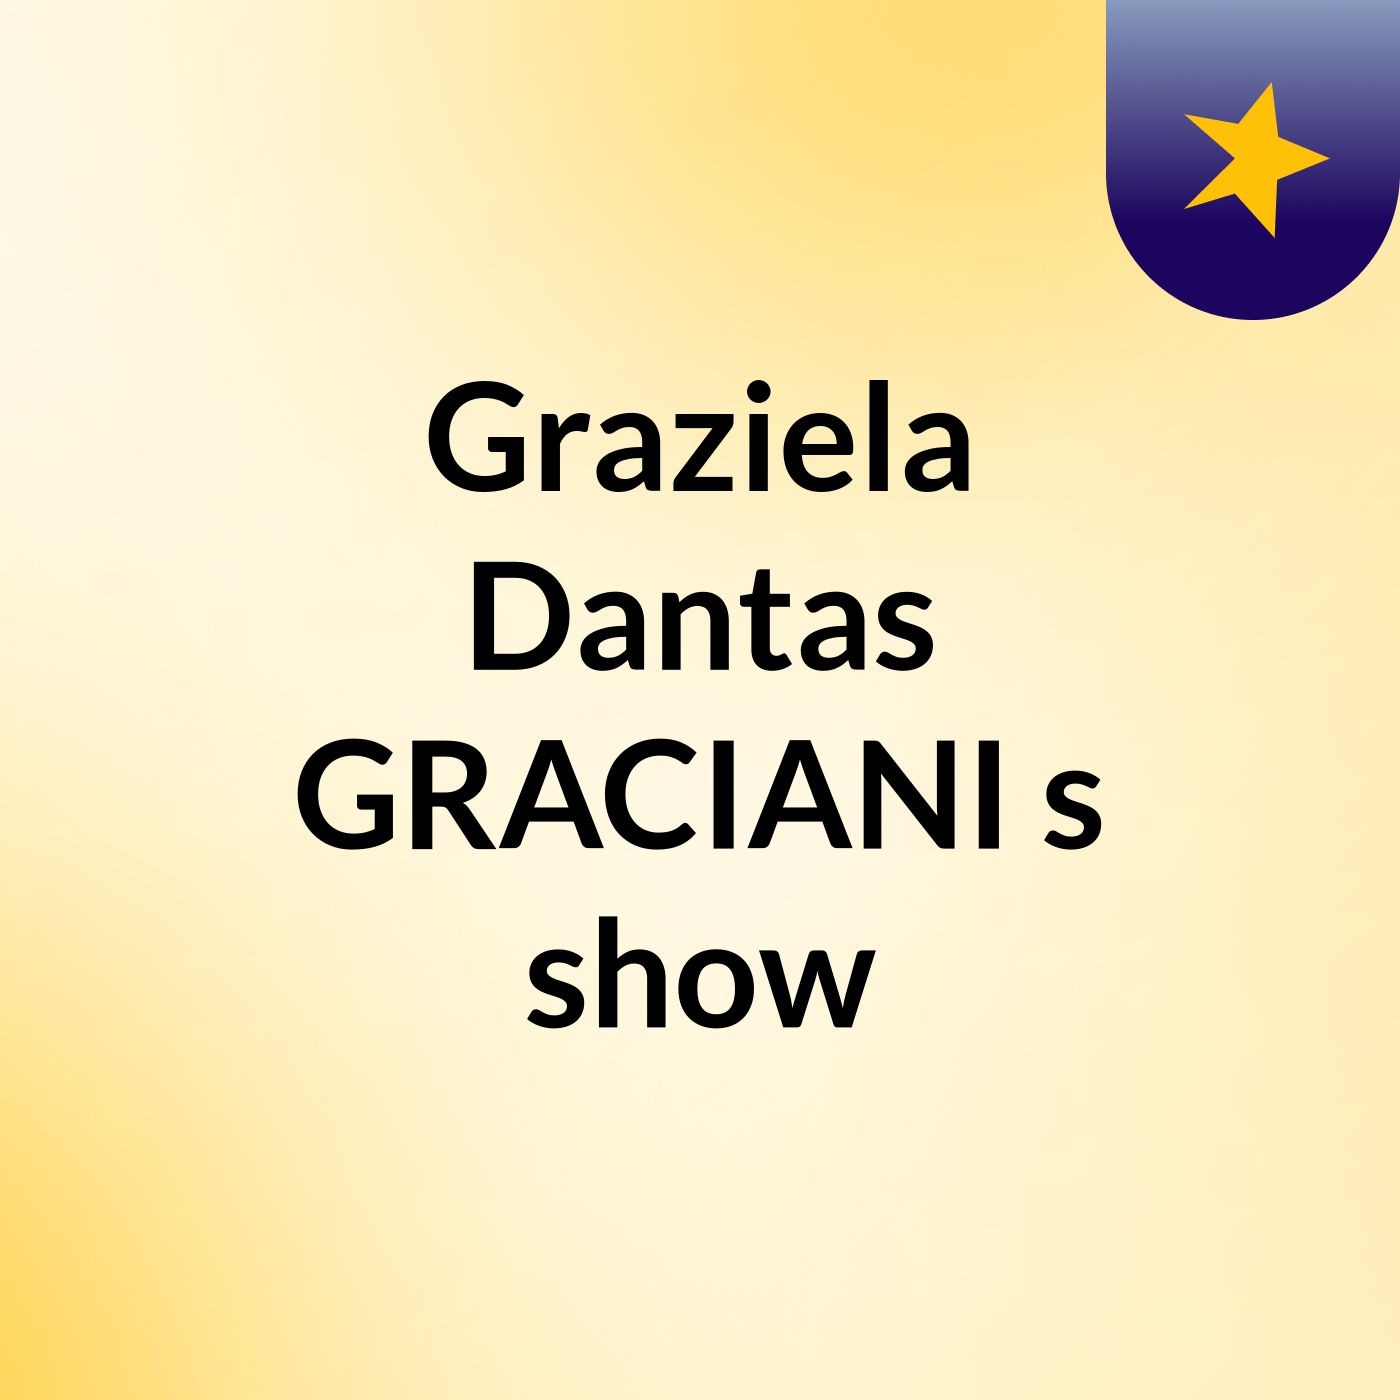 Graziela Dantas GRACIANI's show